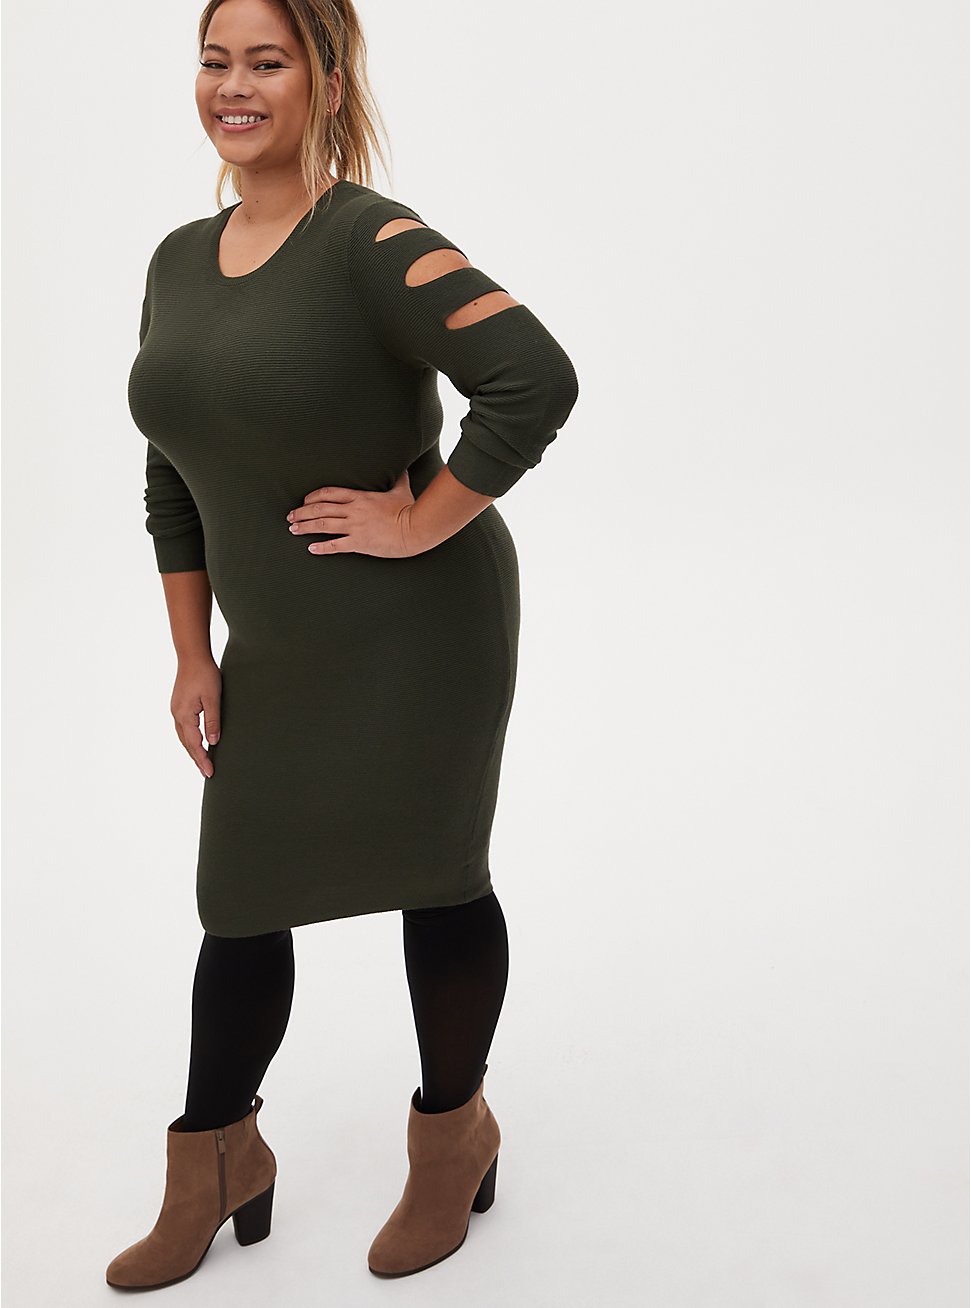 Plus Size - Olive Green Cutout Sweater Dress - Torrid